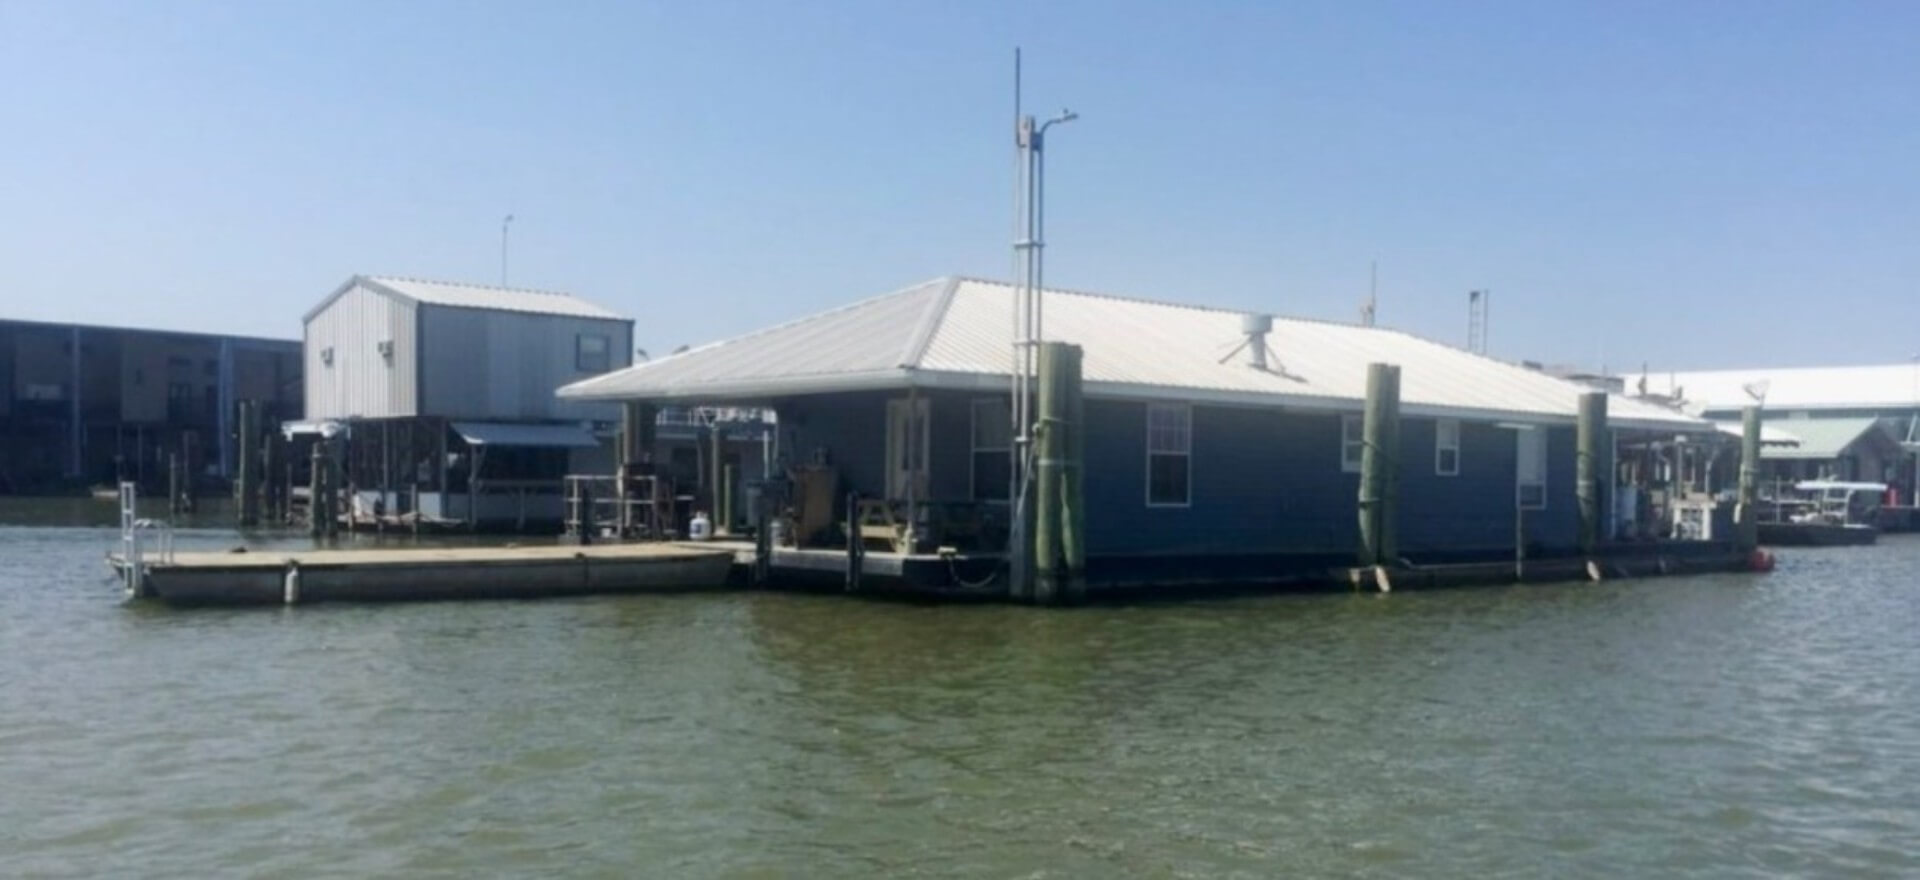 Houseboat lodging for fishing charters in Venice, Louisiana